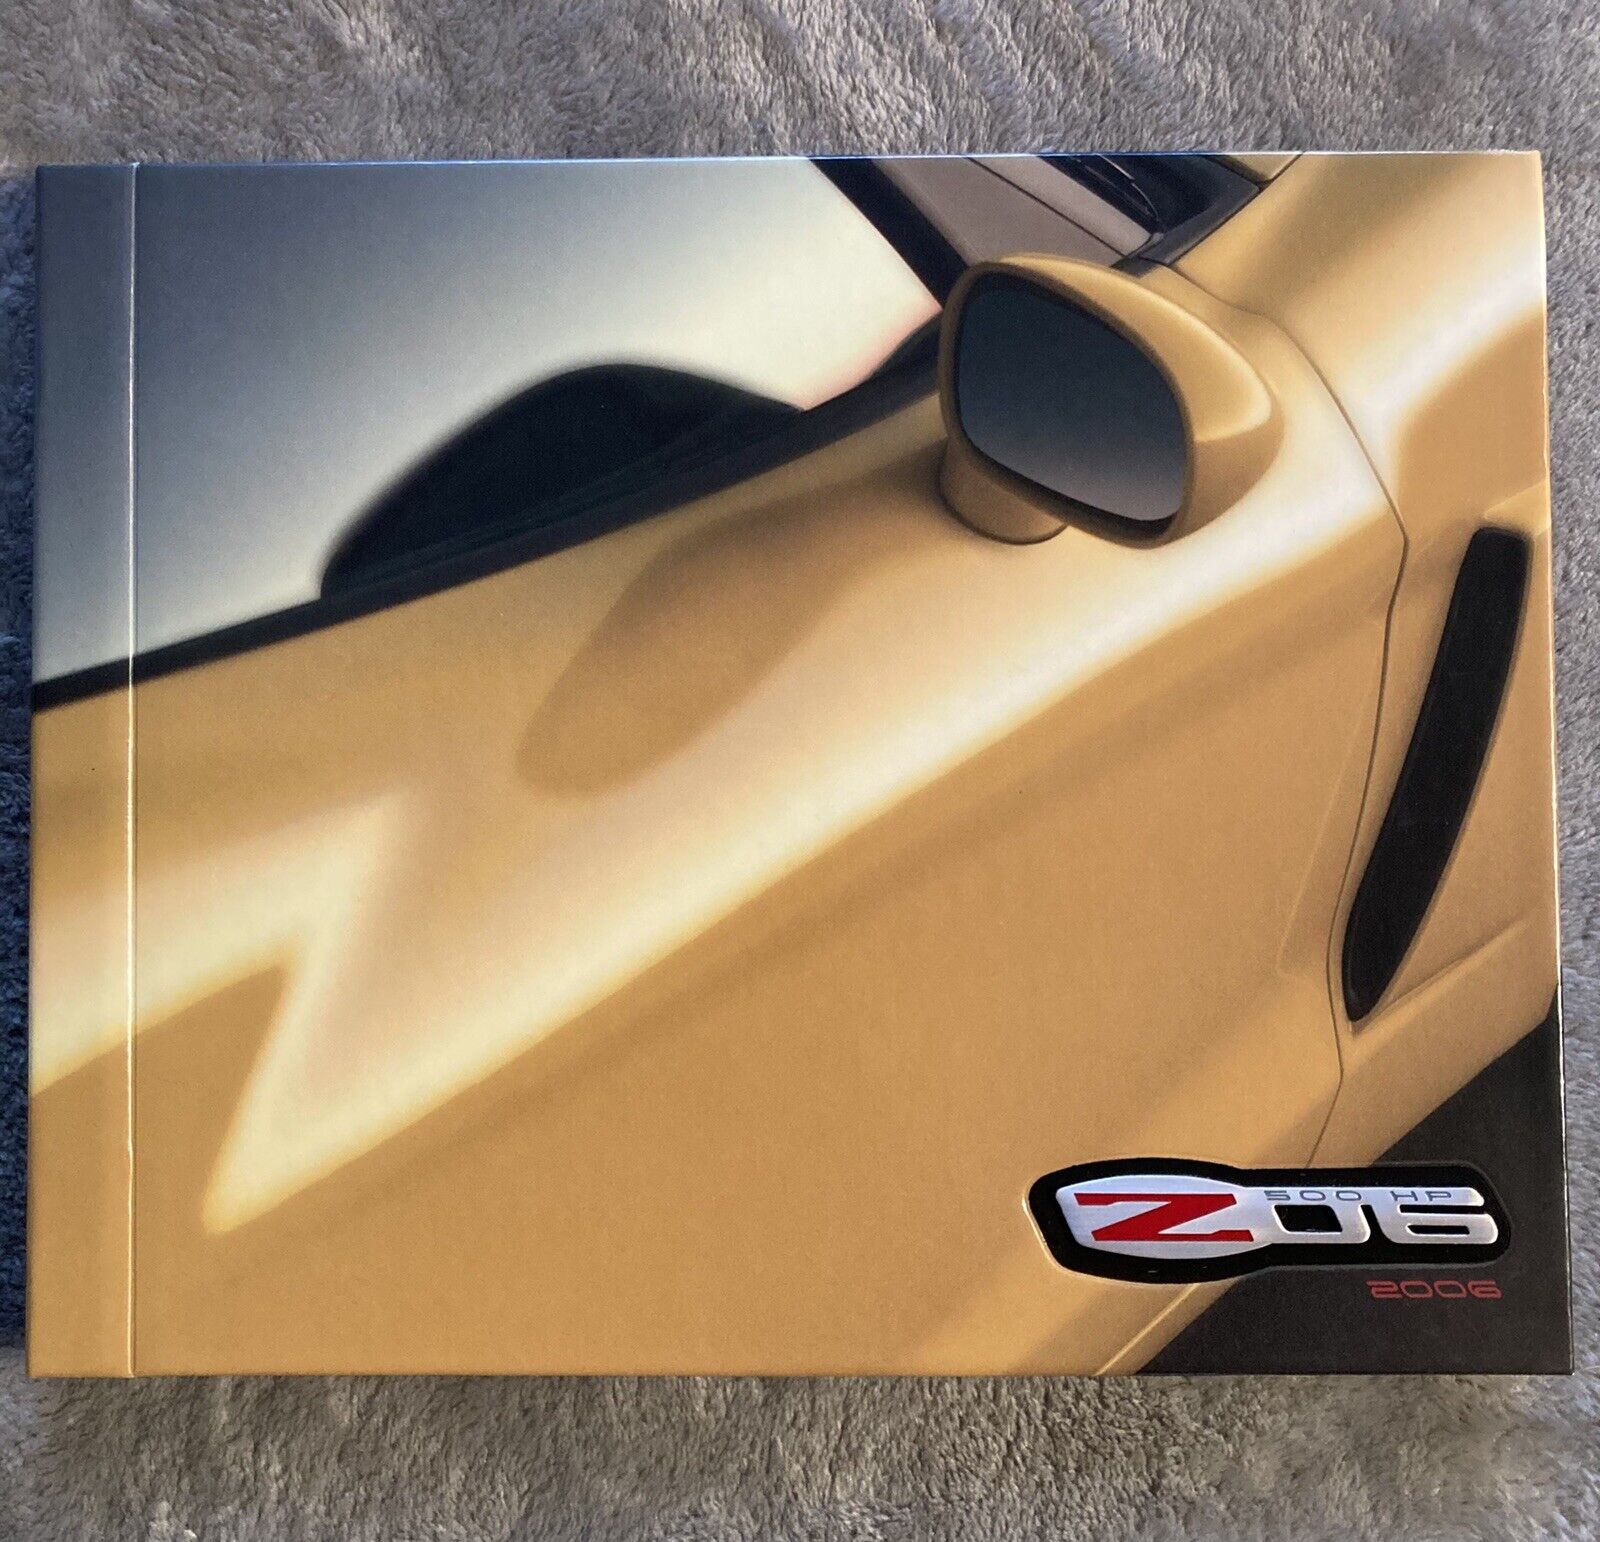 2006 Chevrolet Corvette Z06 Hardcover Book Brochure/cd Excellent Condition Rare!